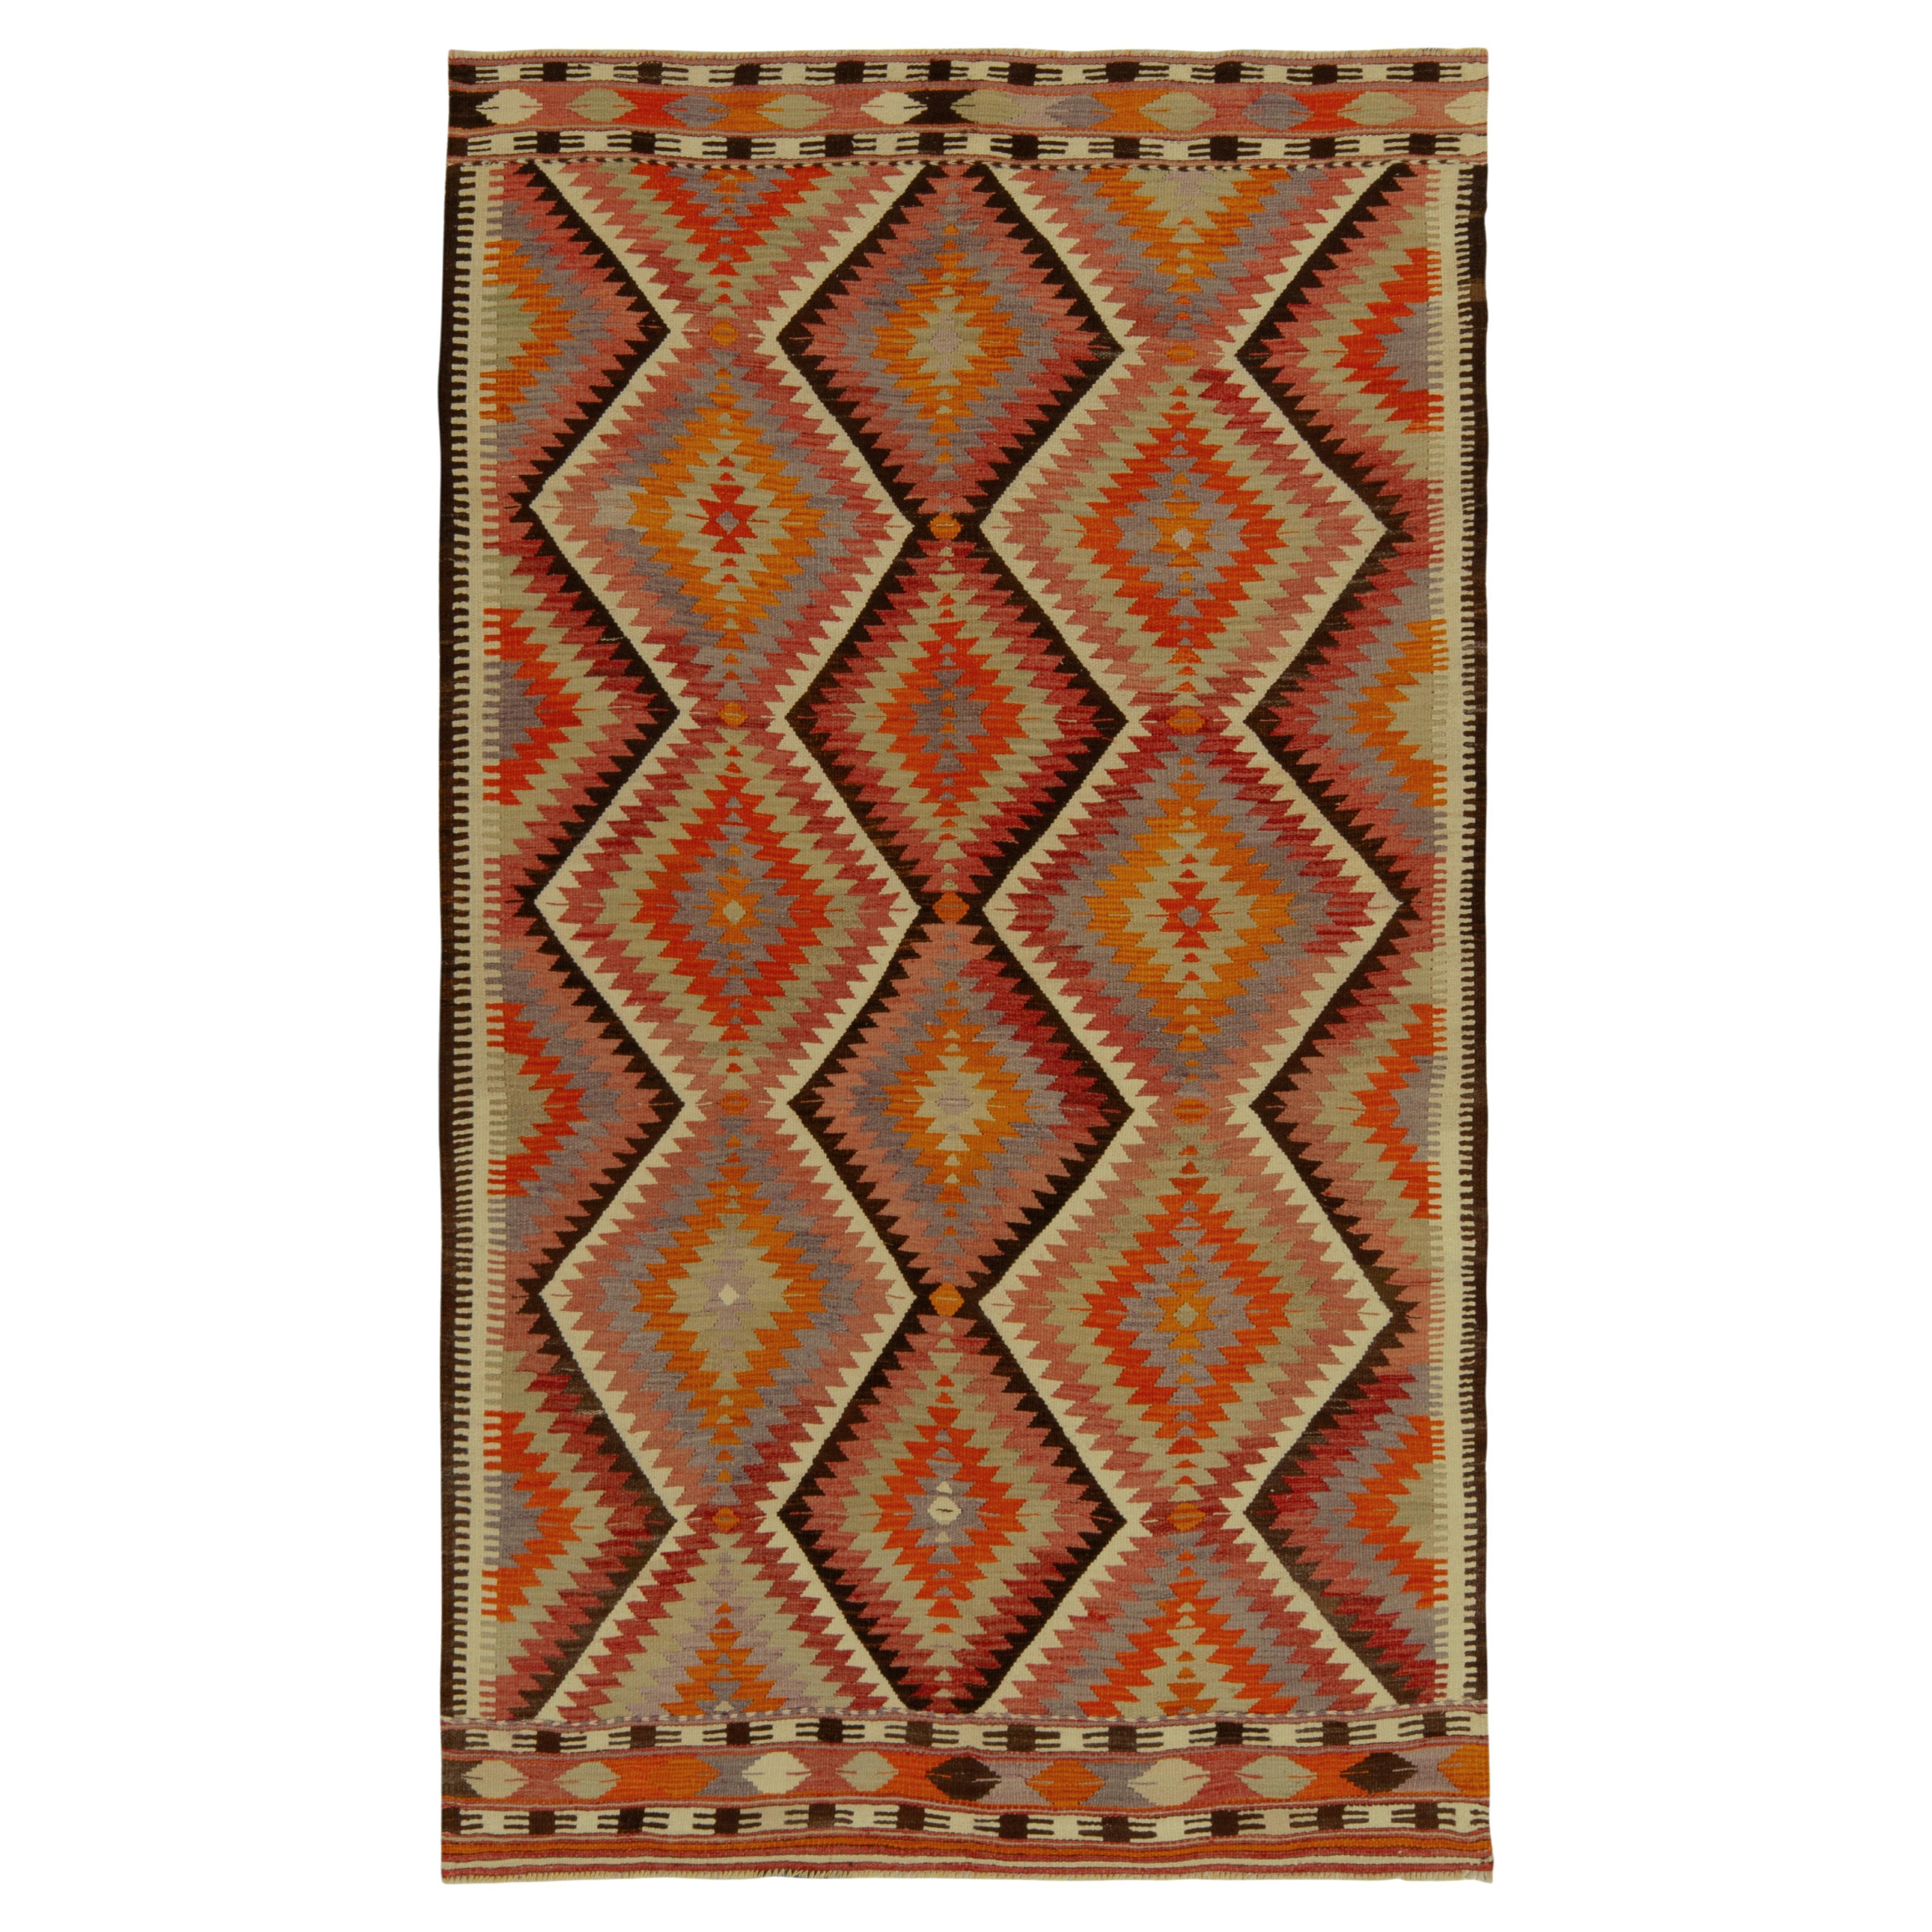 1950s Vintage Turkish Kilim rug in Green Orange Geometric Pattern